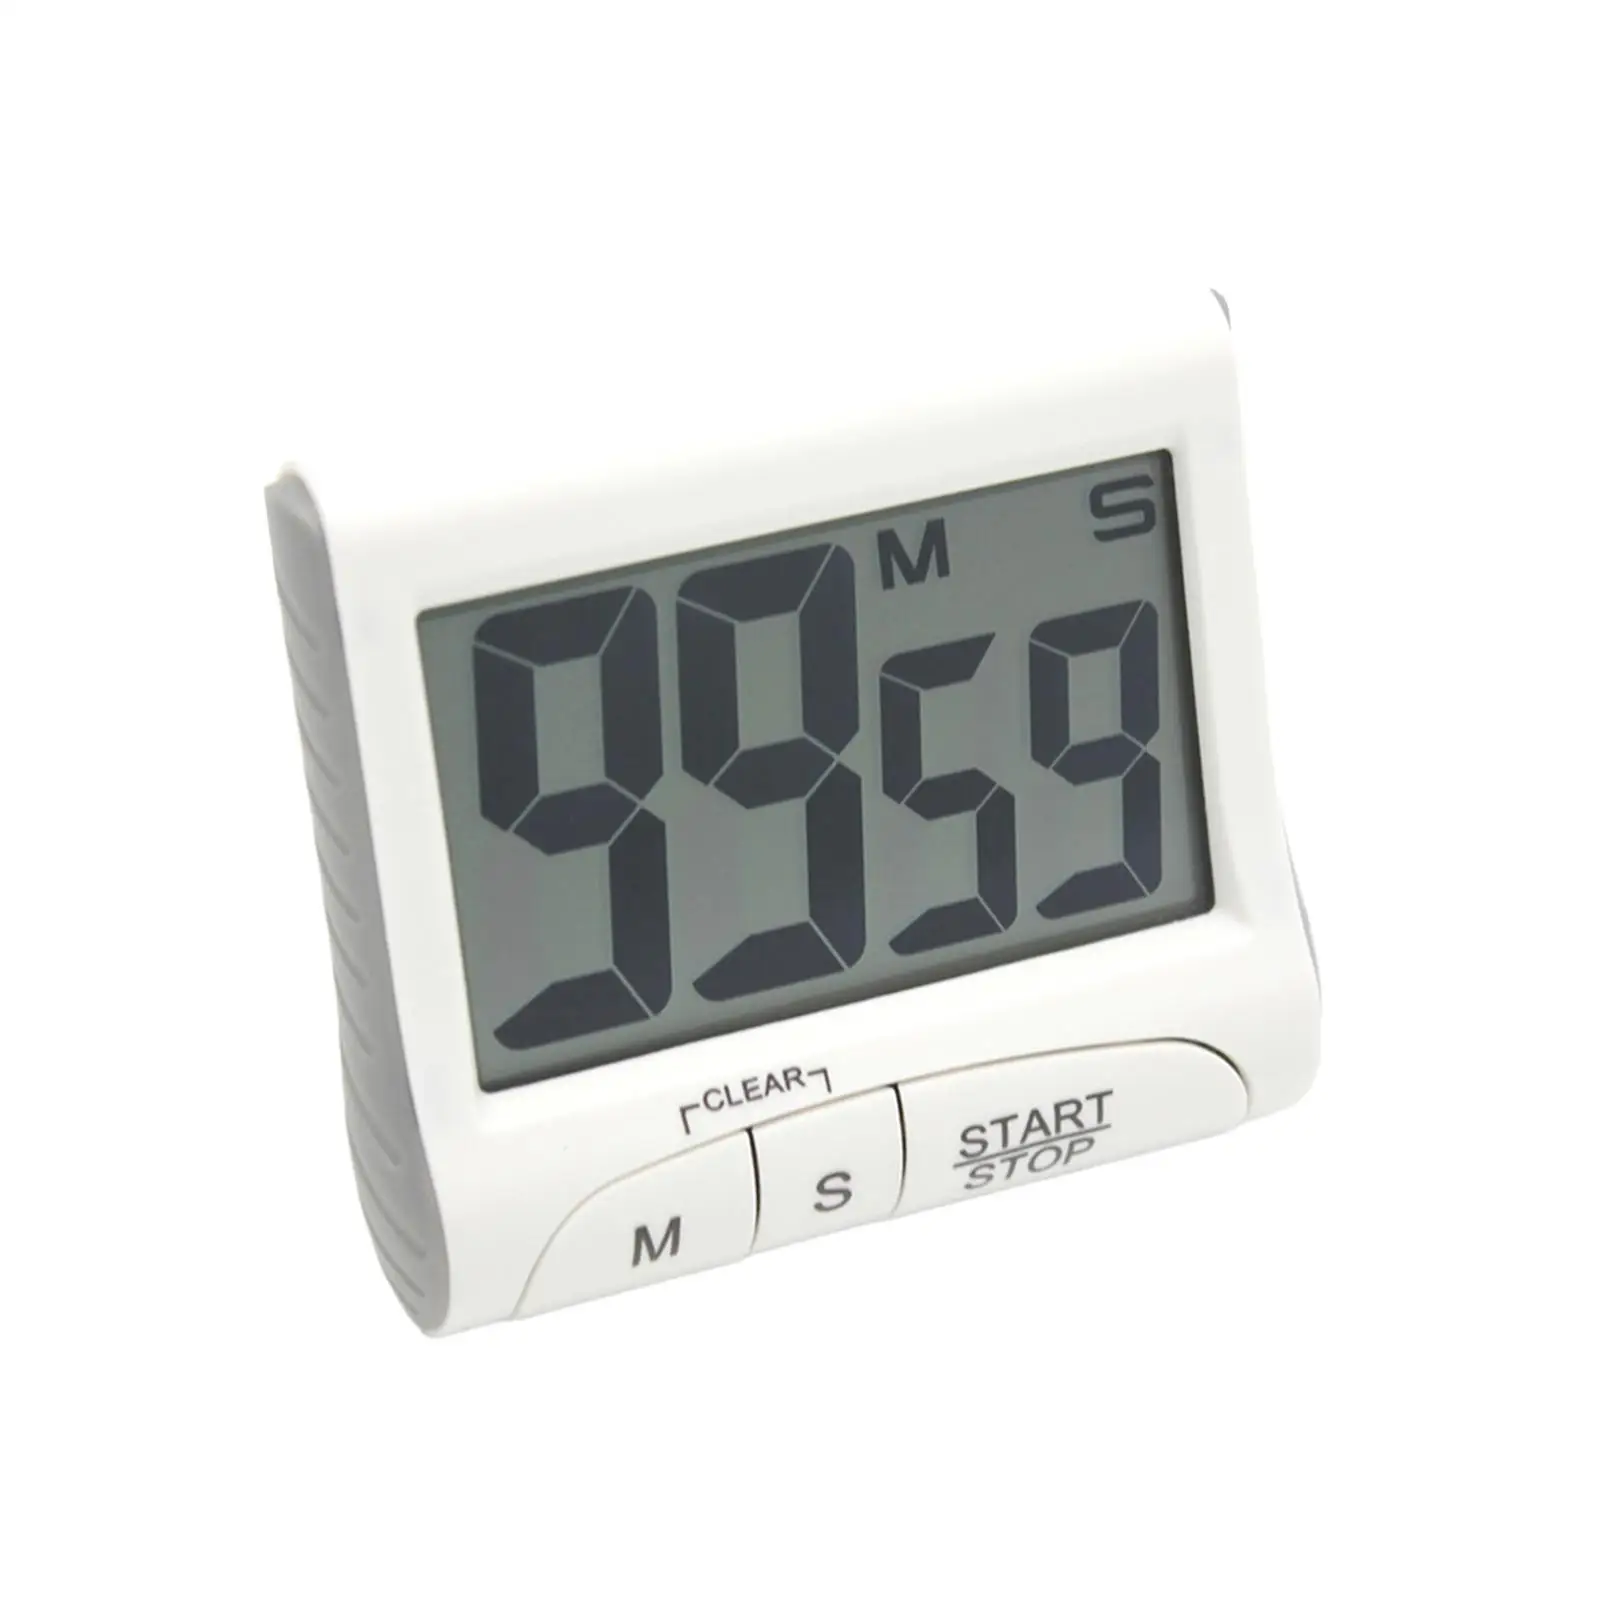 Countdown Timer Clock Large LCD Display Loud Alarm Cooking Timer Digital Timer for Game Games Baking Exercising Studying